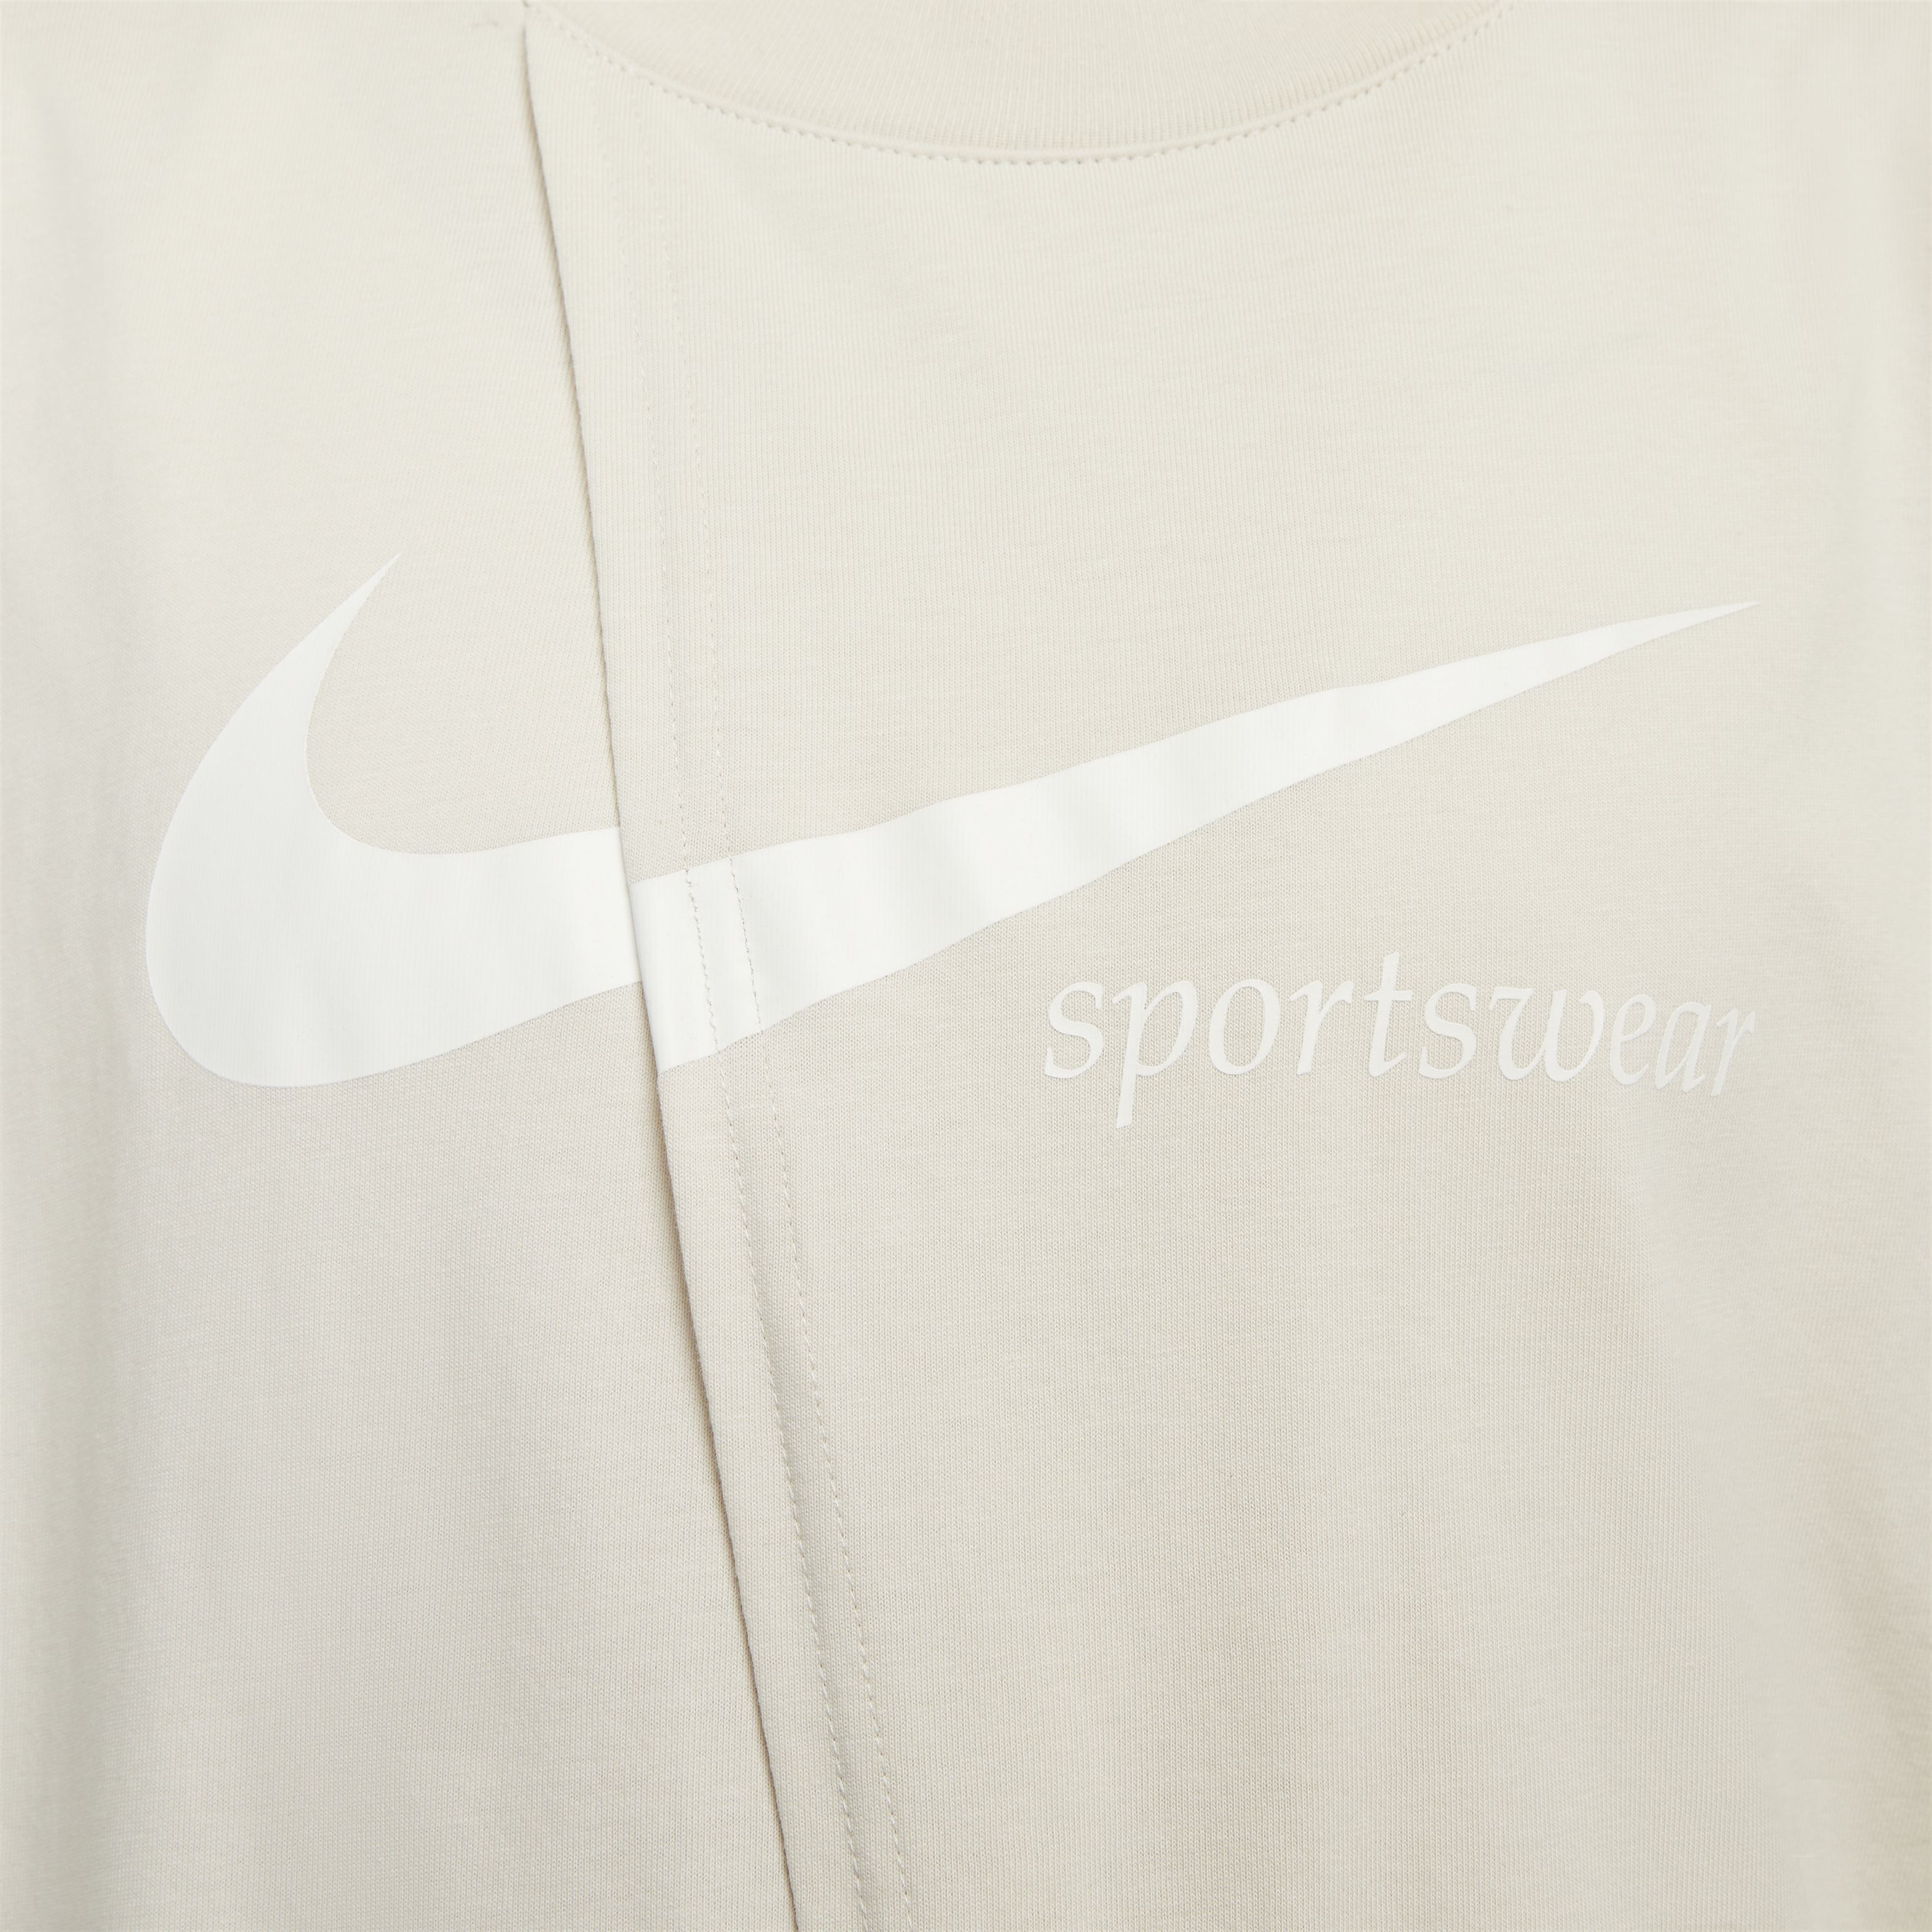 Nike Sportswear Collection, Marrón verdoso claro/Vela, hi-res